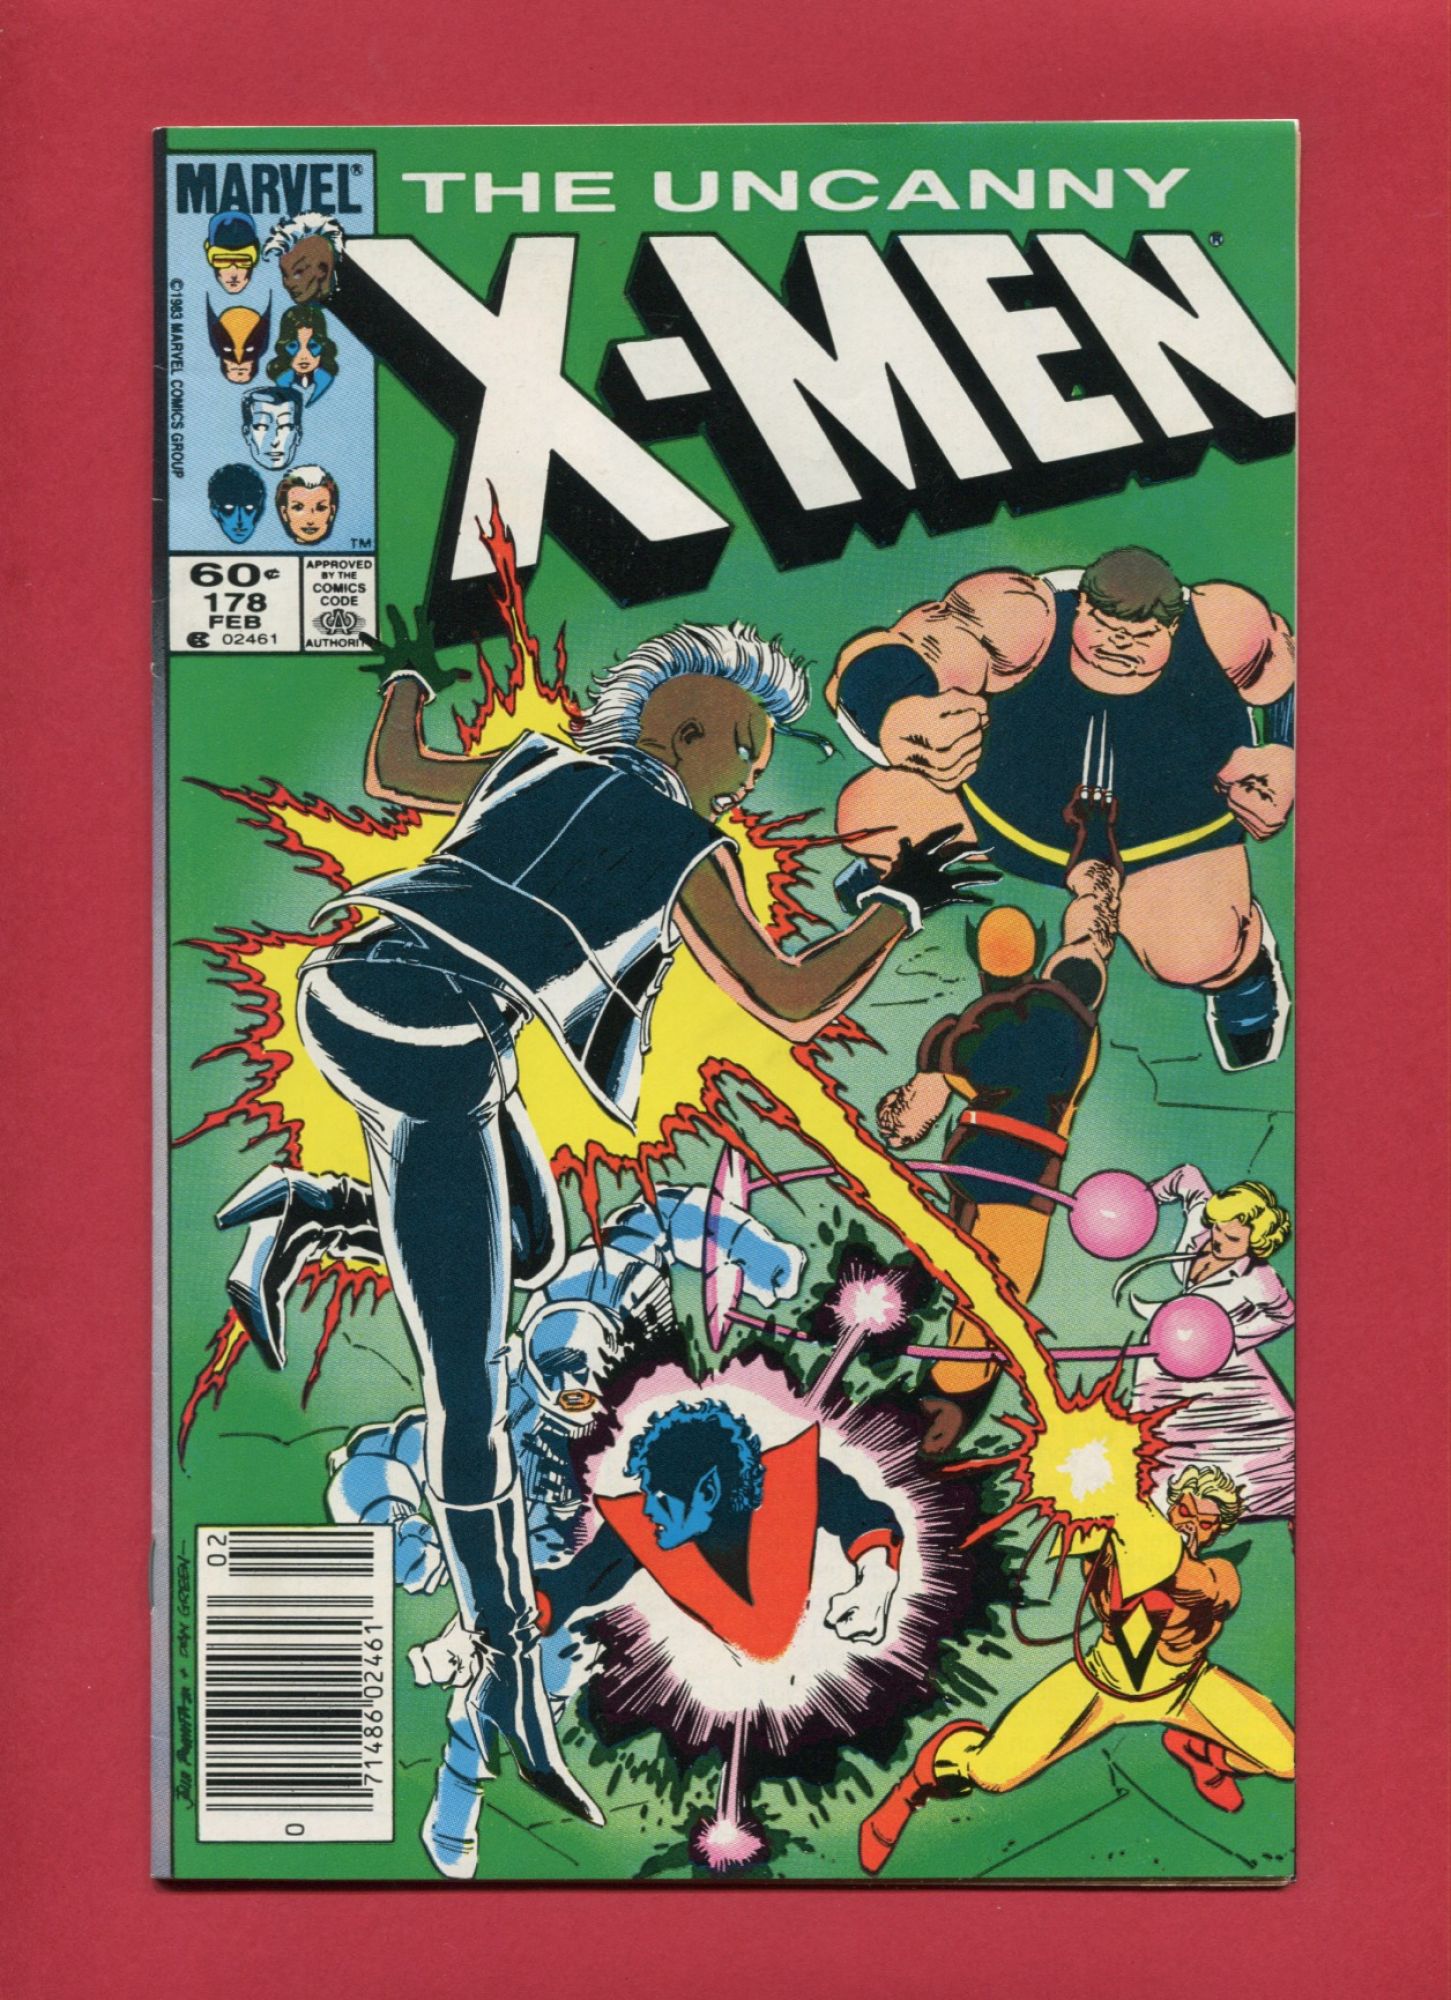 Uncanny X-Men #178, Feb 1984, 8.0 VF